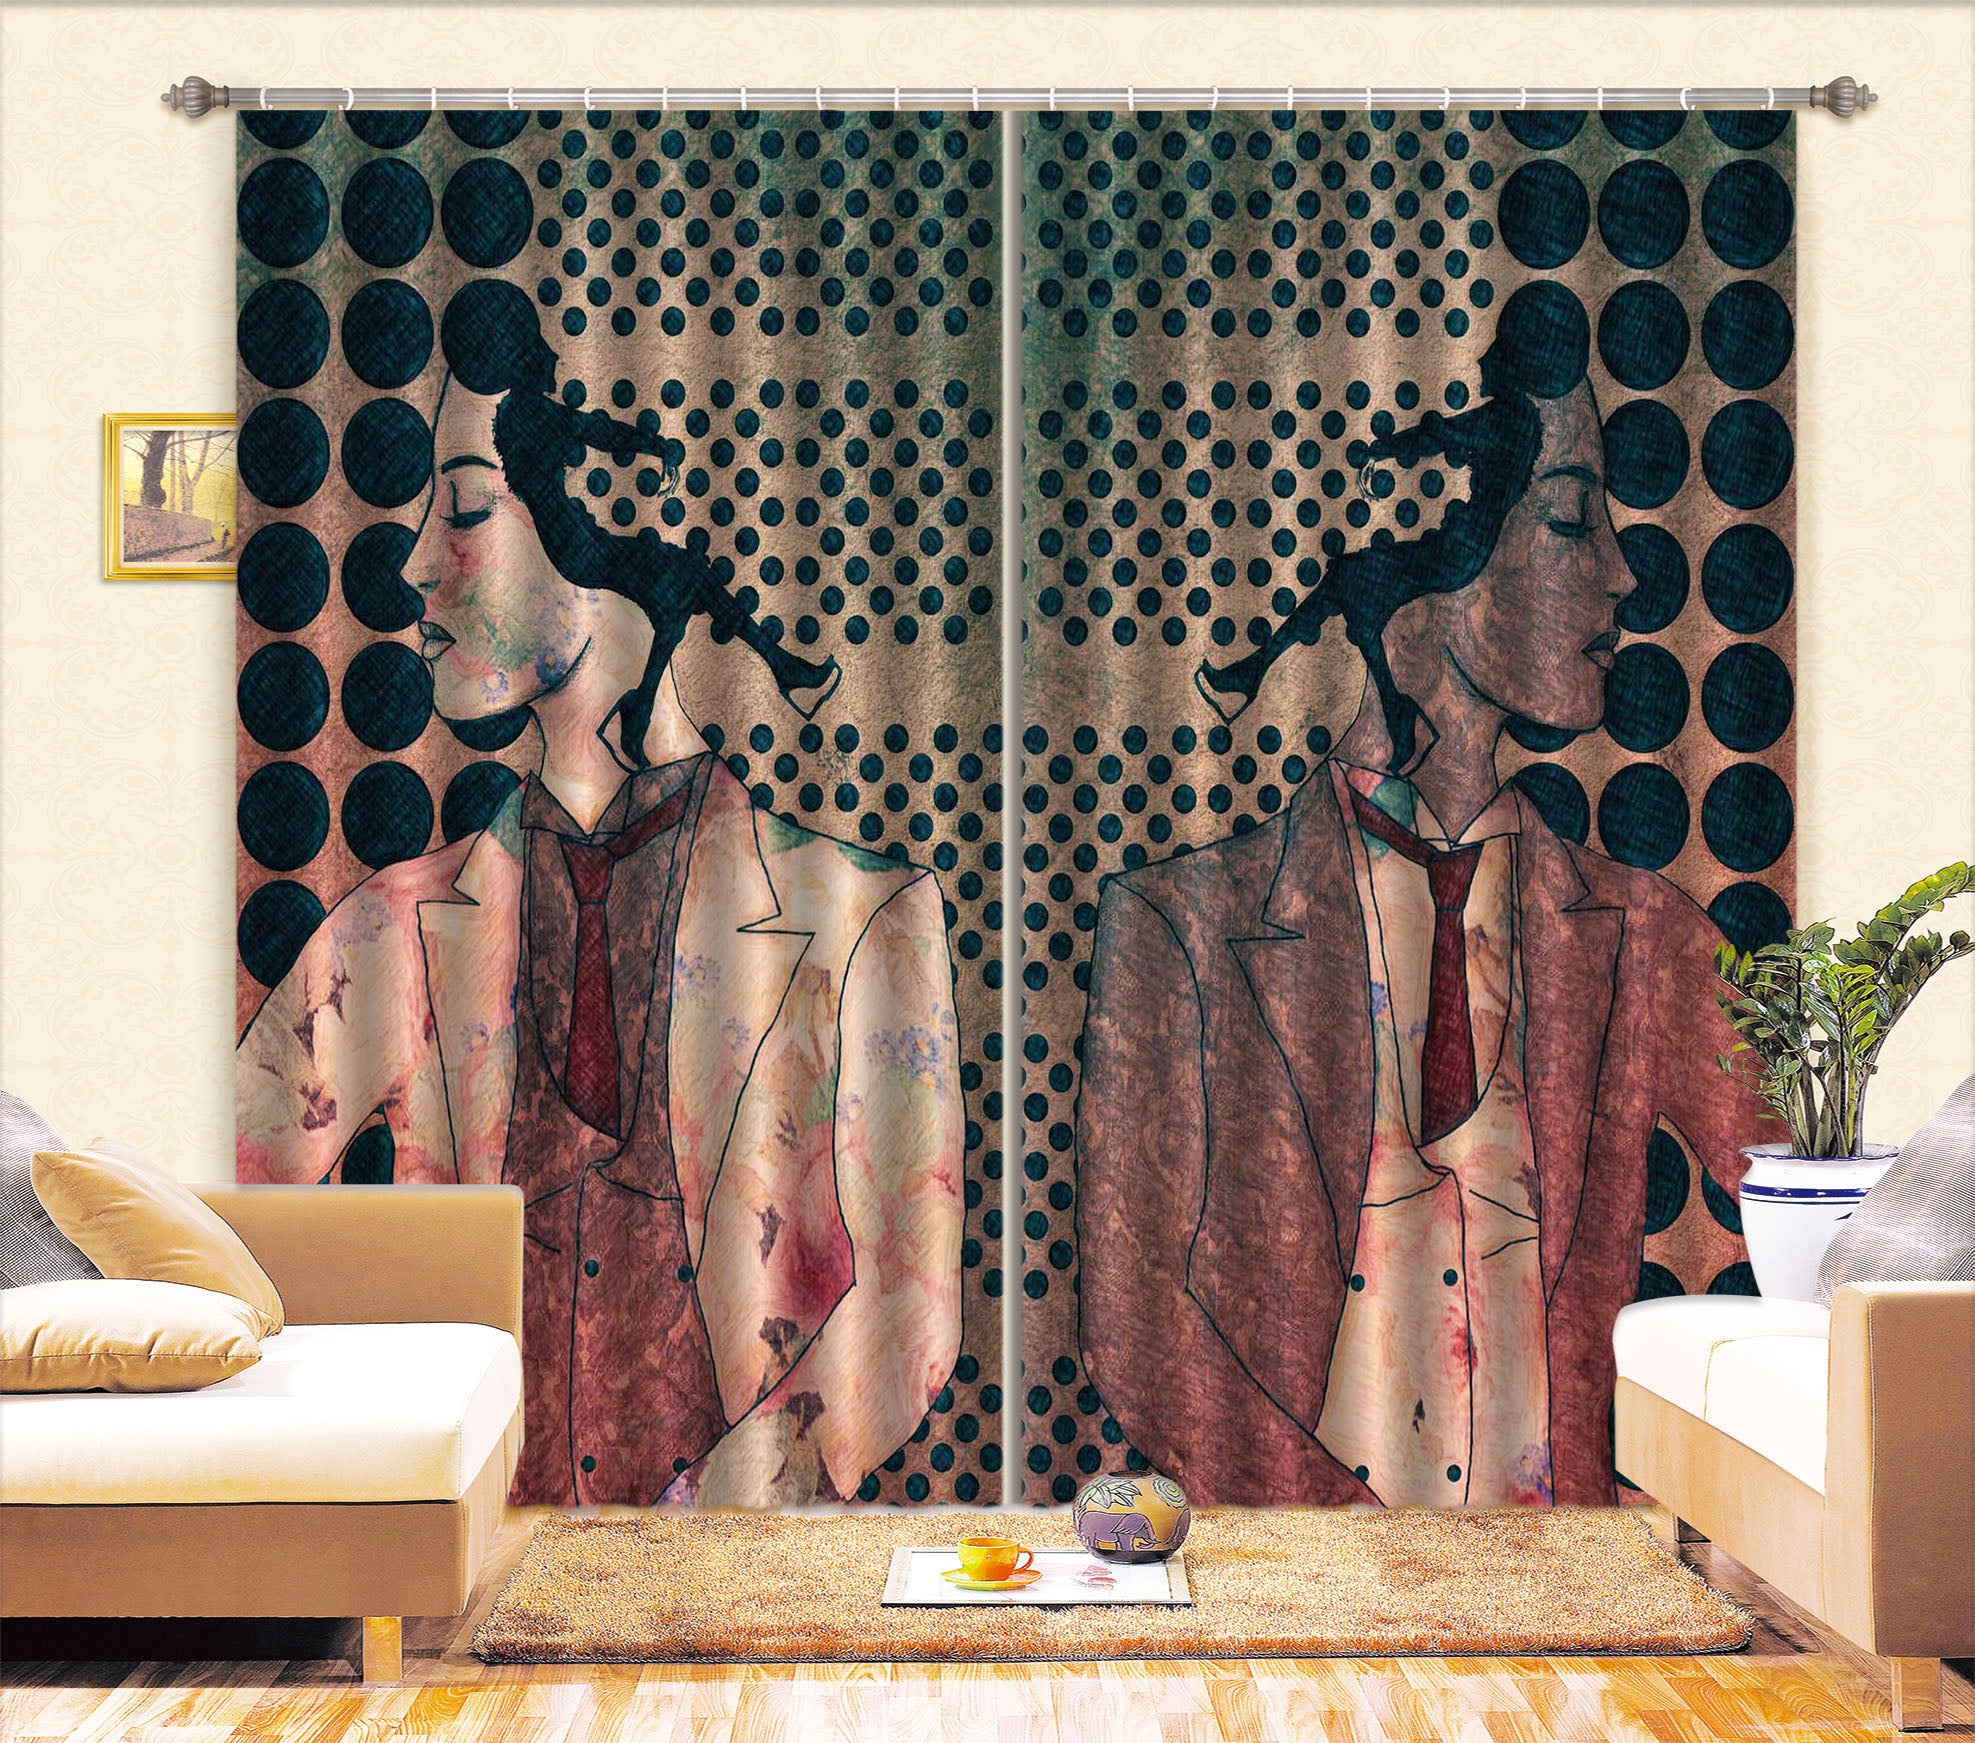 3D Dots Spots 041 Marco Cavazzana Curtain Curtains Drapes